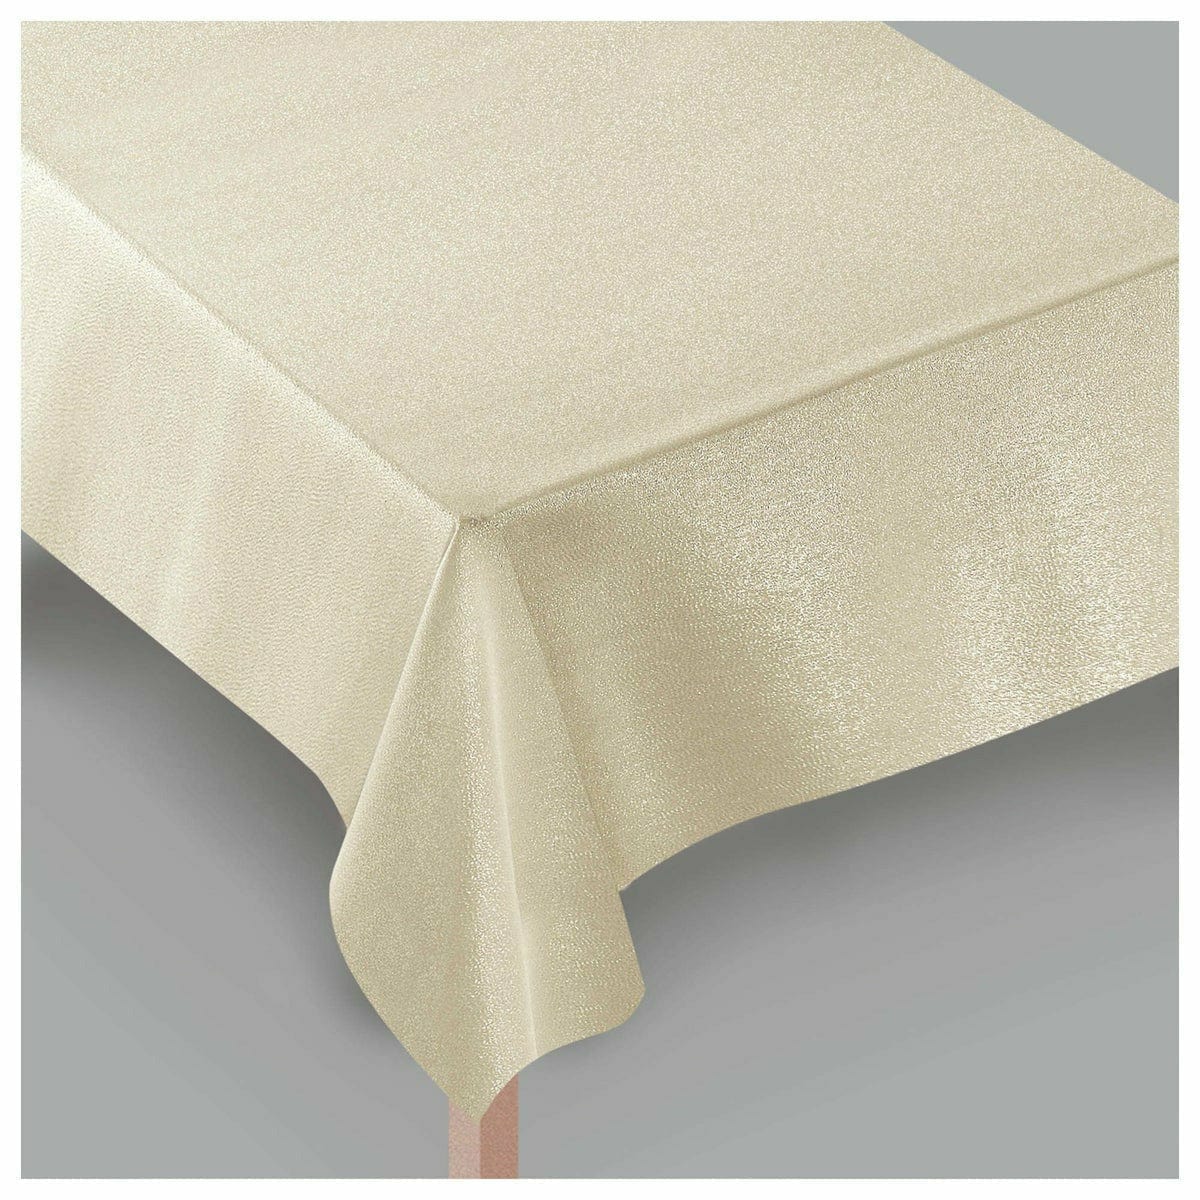 Amscan BASIC Metallic Tablecloth, 60" x 104" - Beige